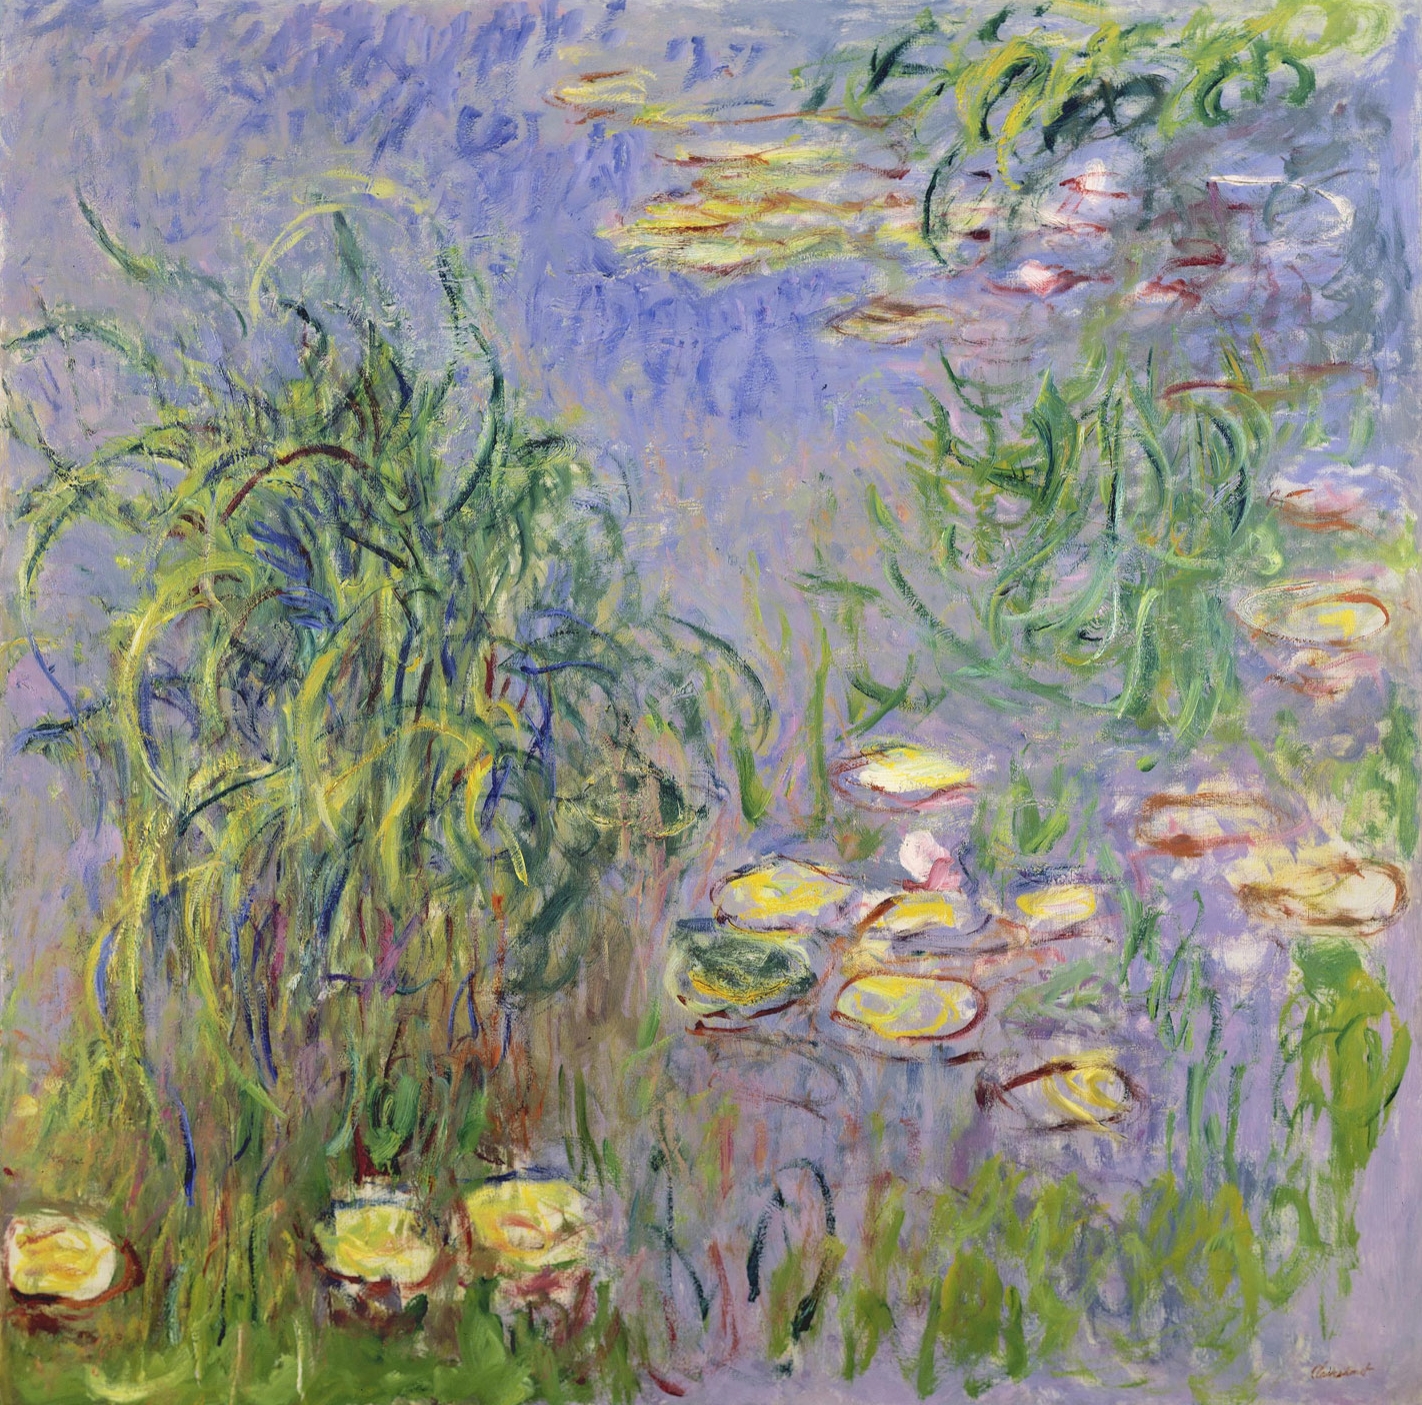 Claude+Monet-1840-1926 (885).jpg